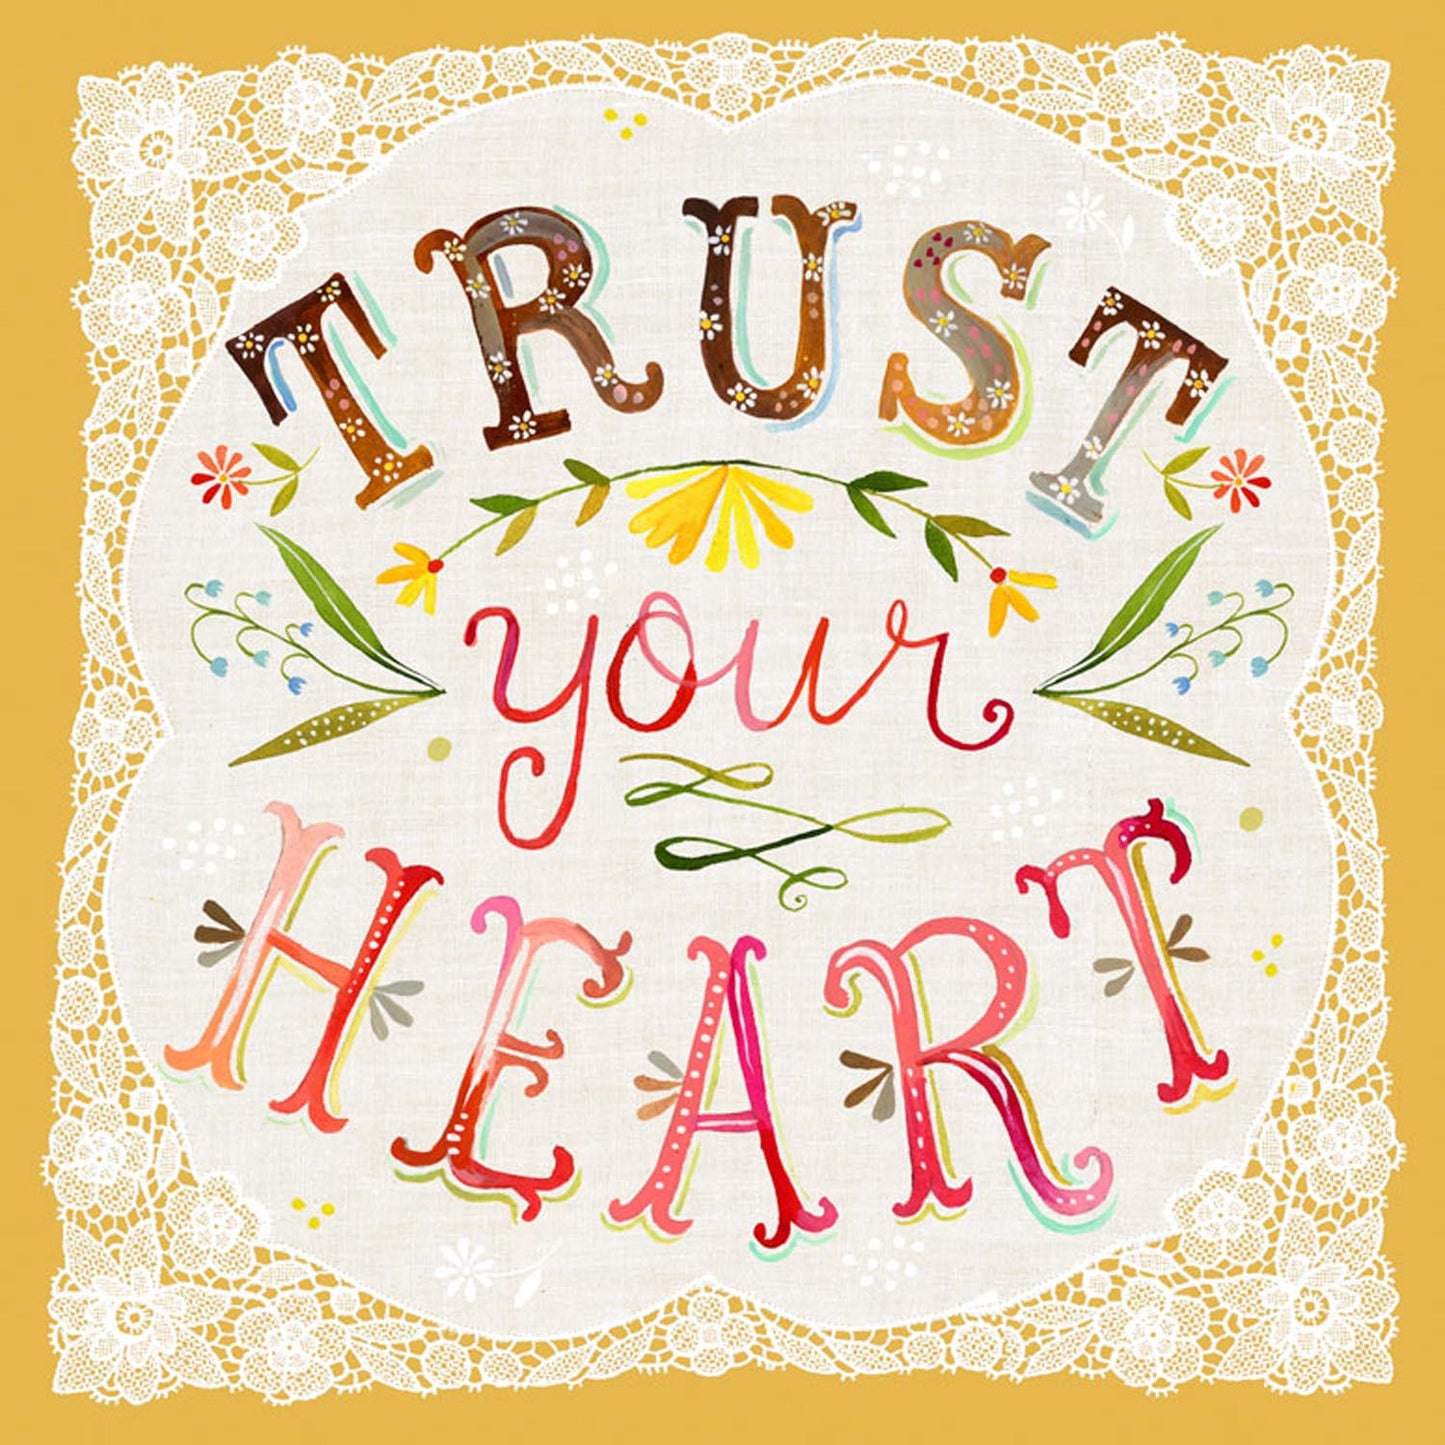 Trust Your Heart Canvas Wall Art